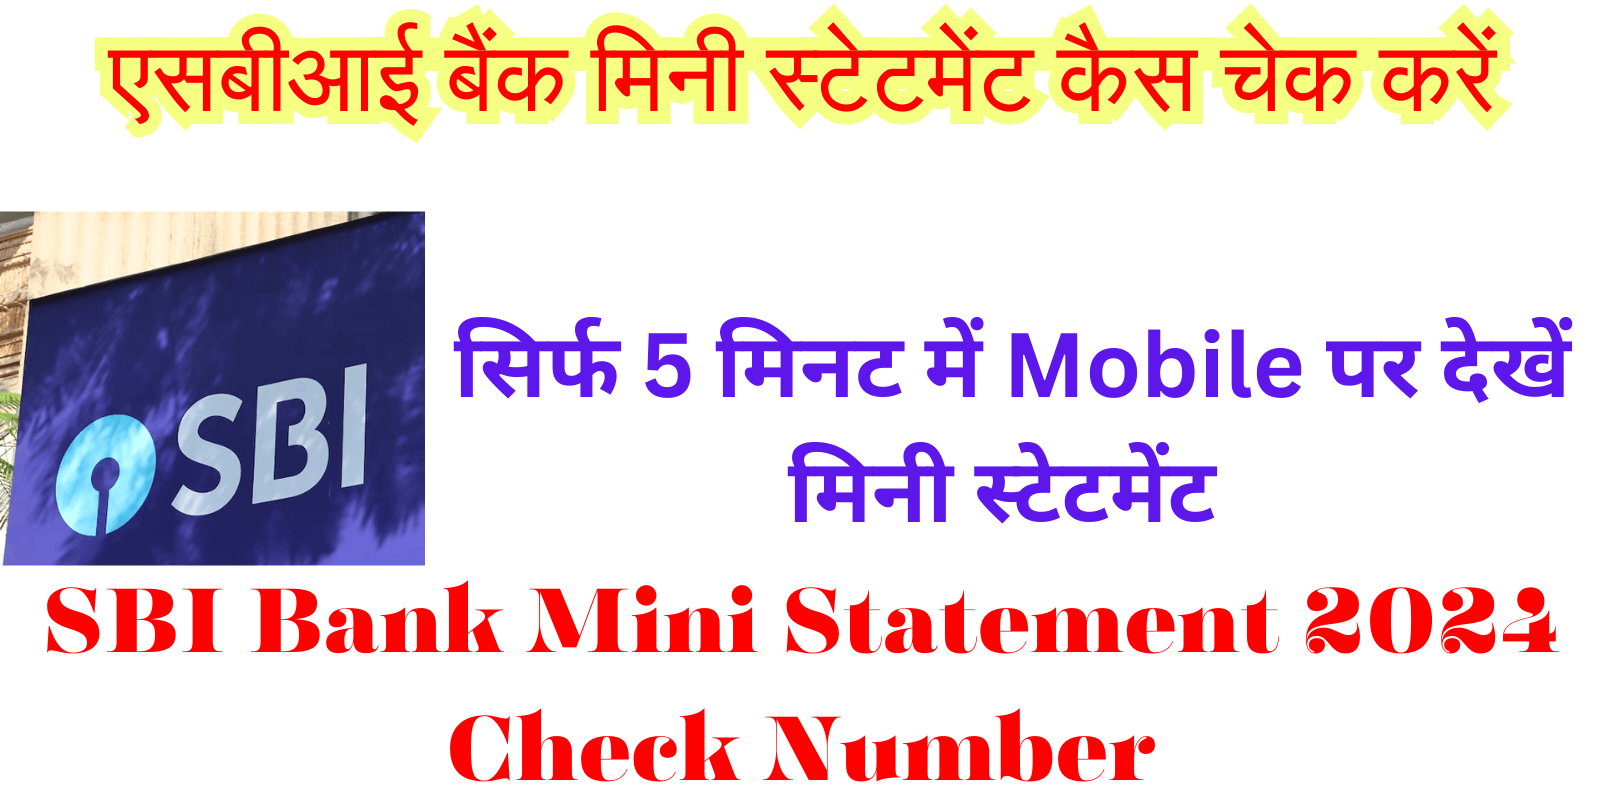 SBI Bank Mini Statement 2024 Check Number